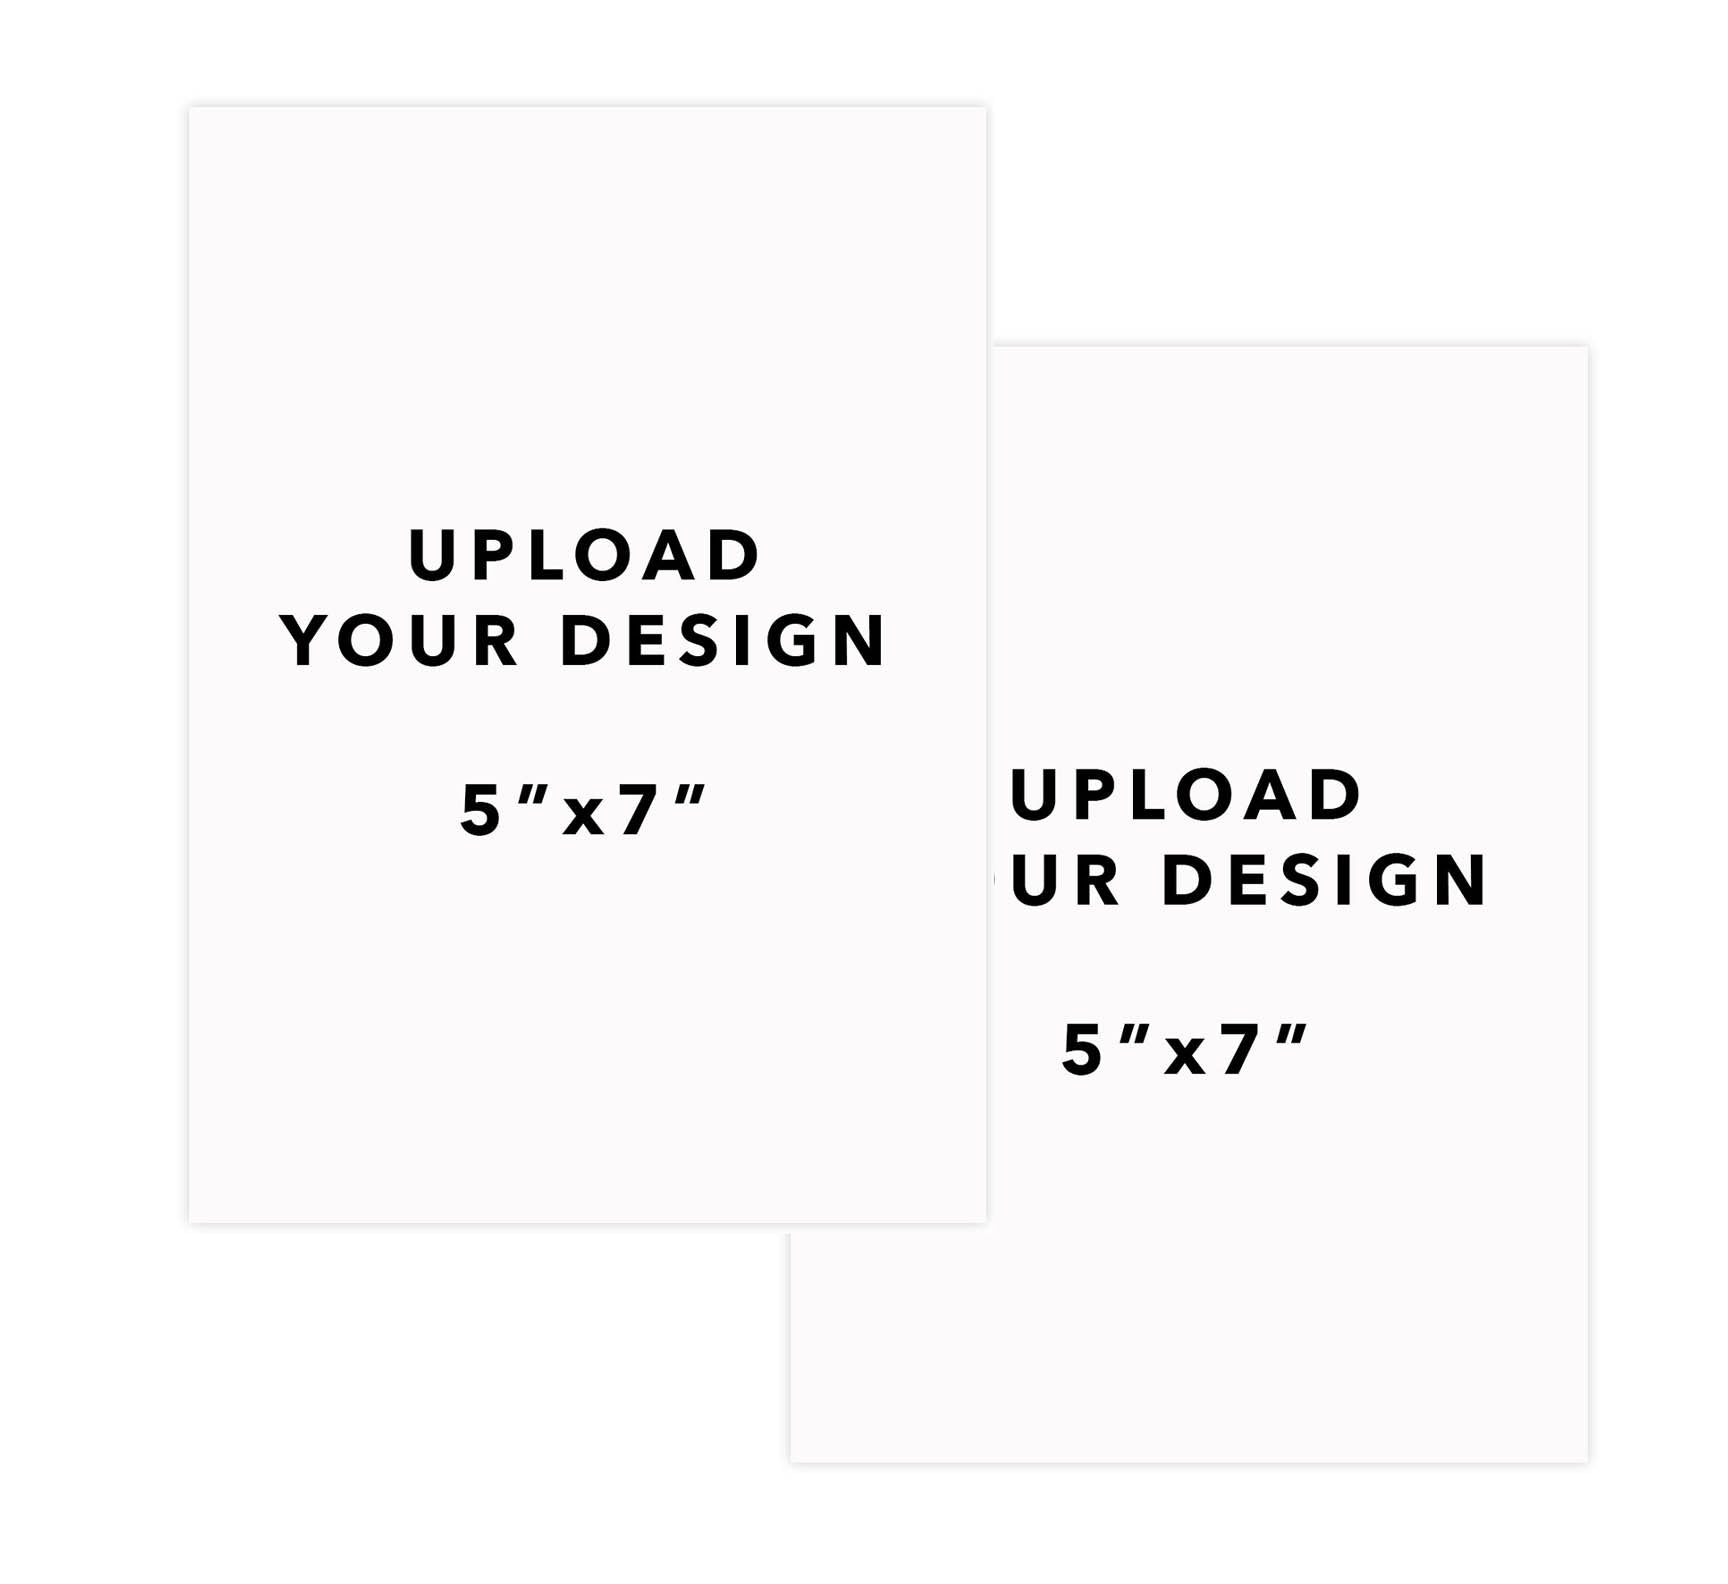 Upload Your Design - 5"x7"